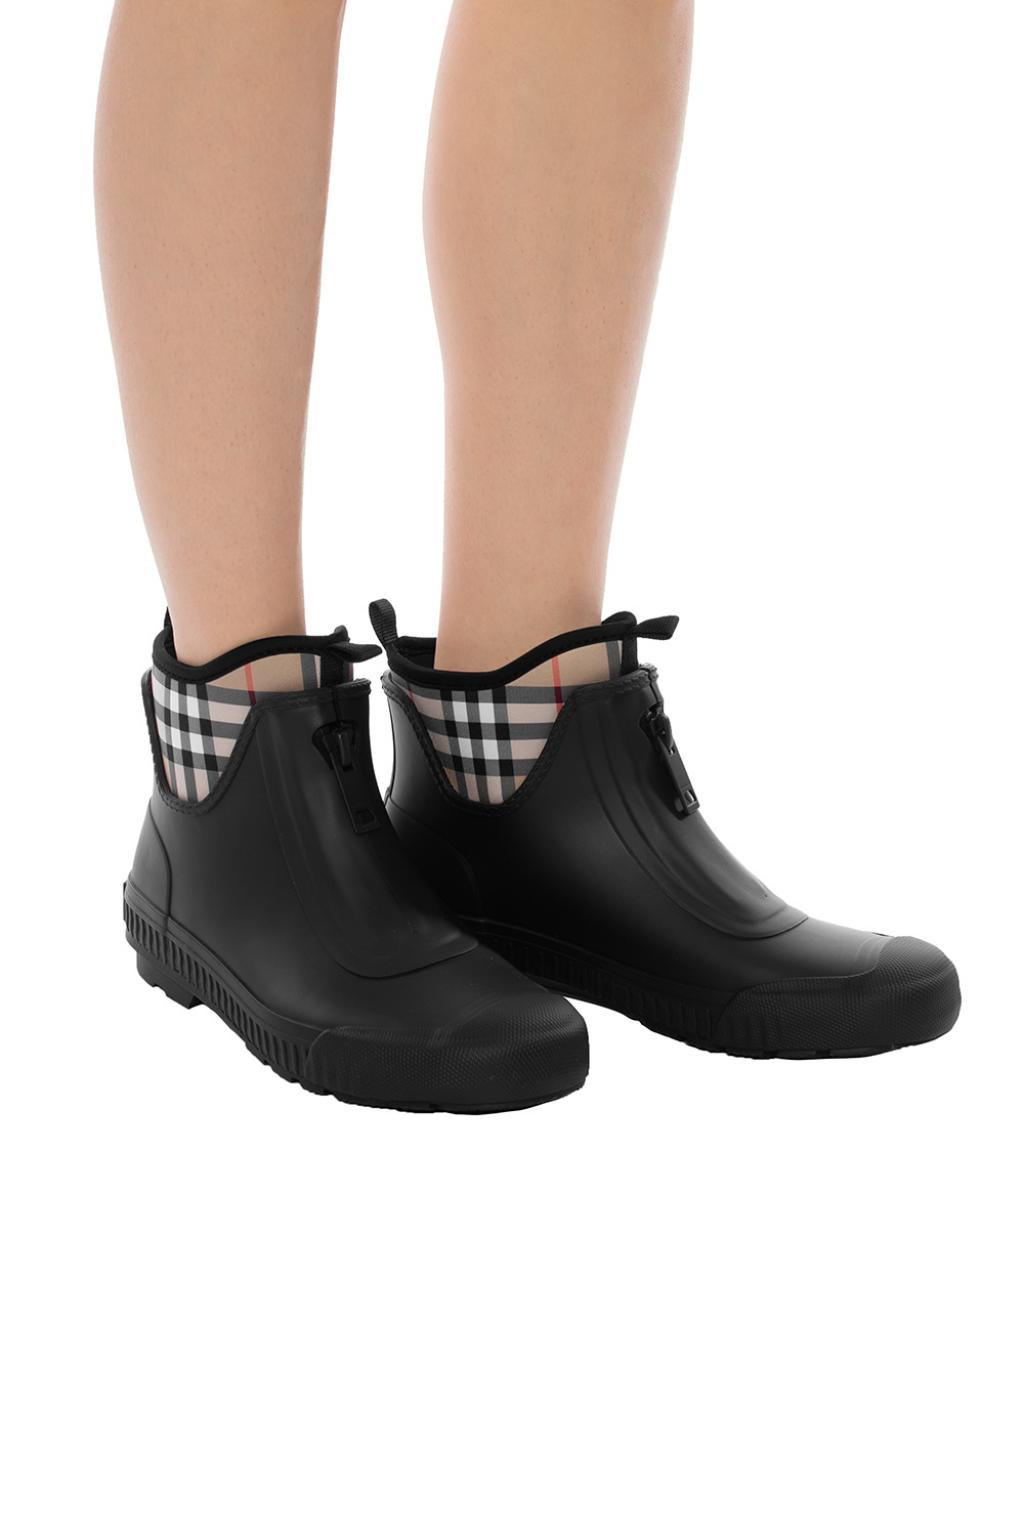 Burberry ‘Flinton’ short rain boots